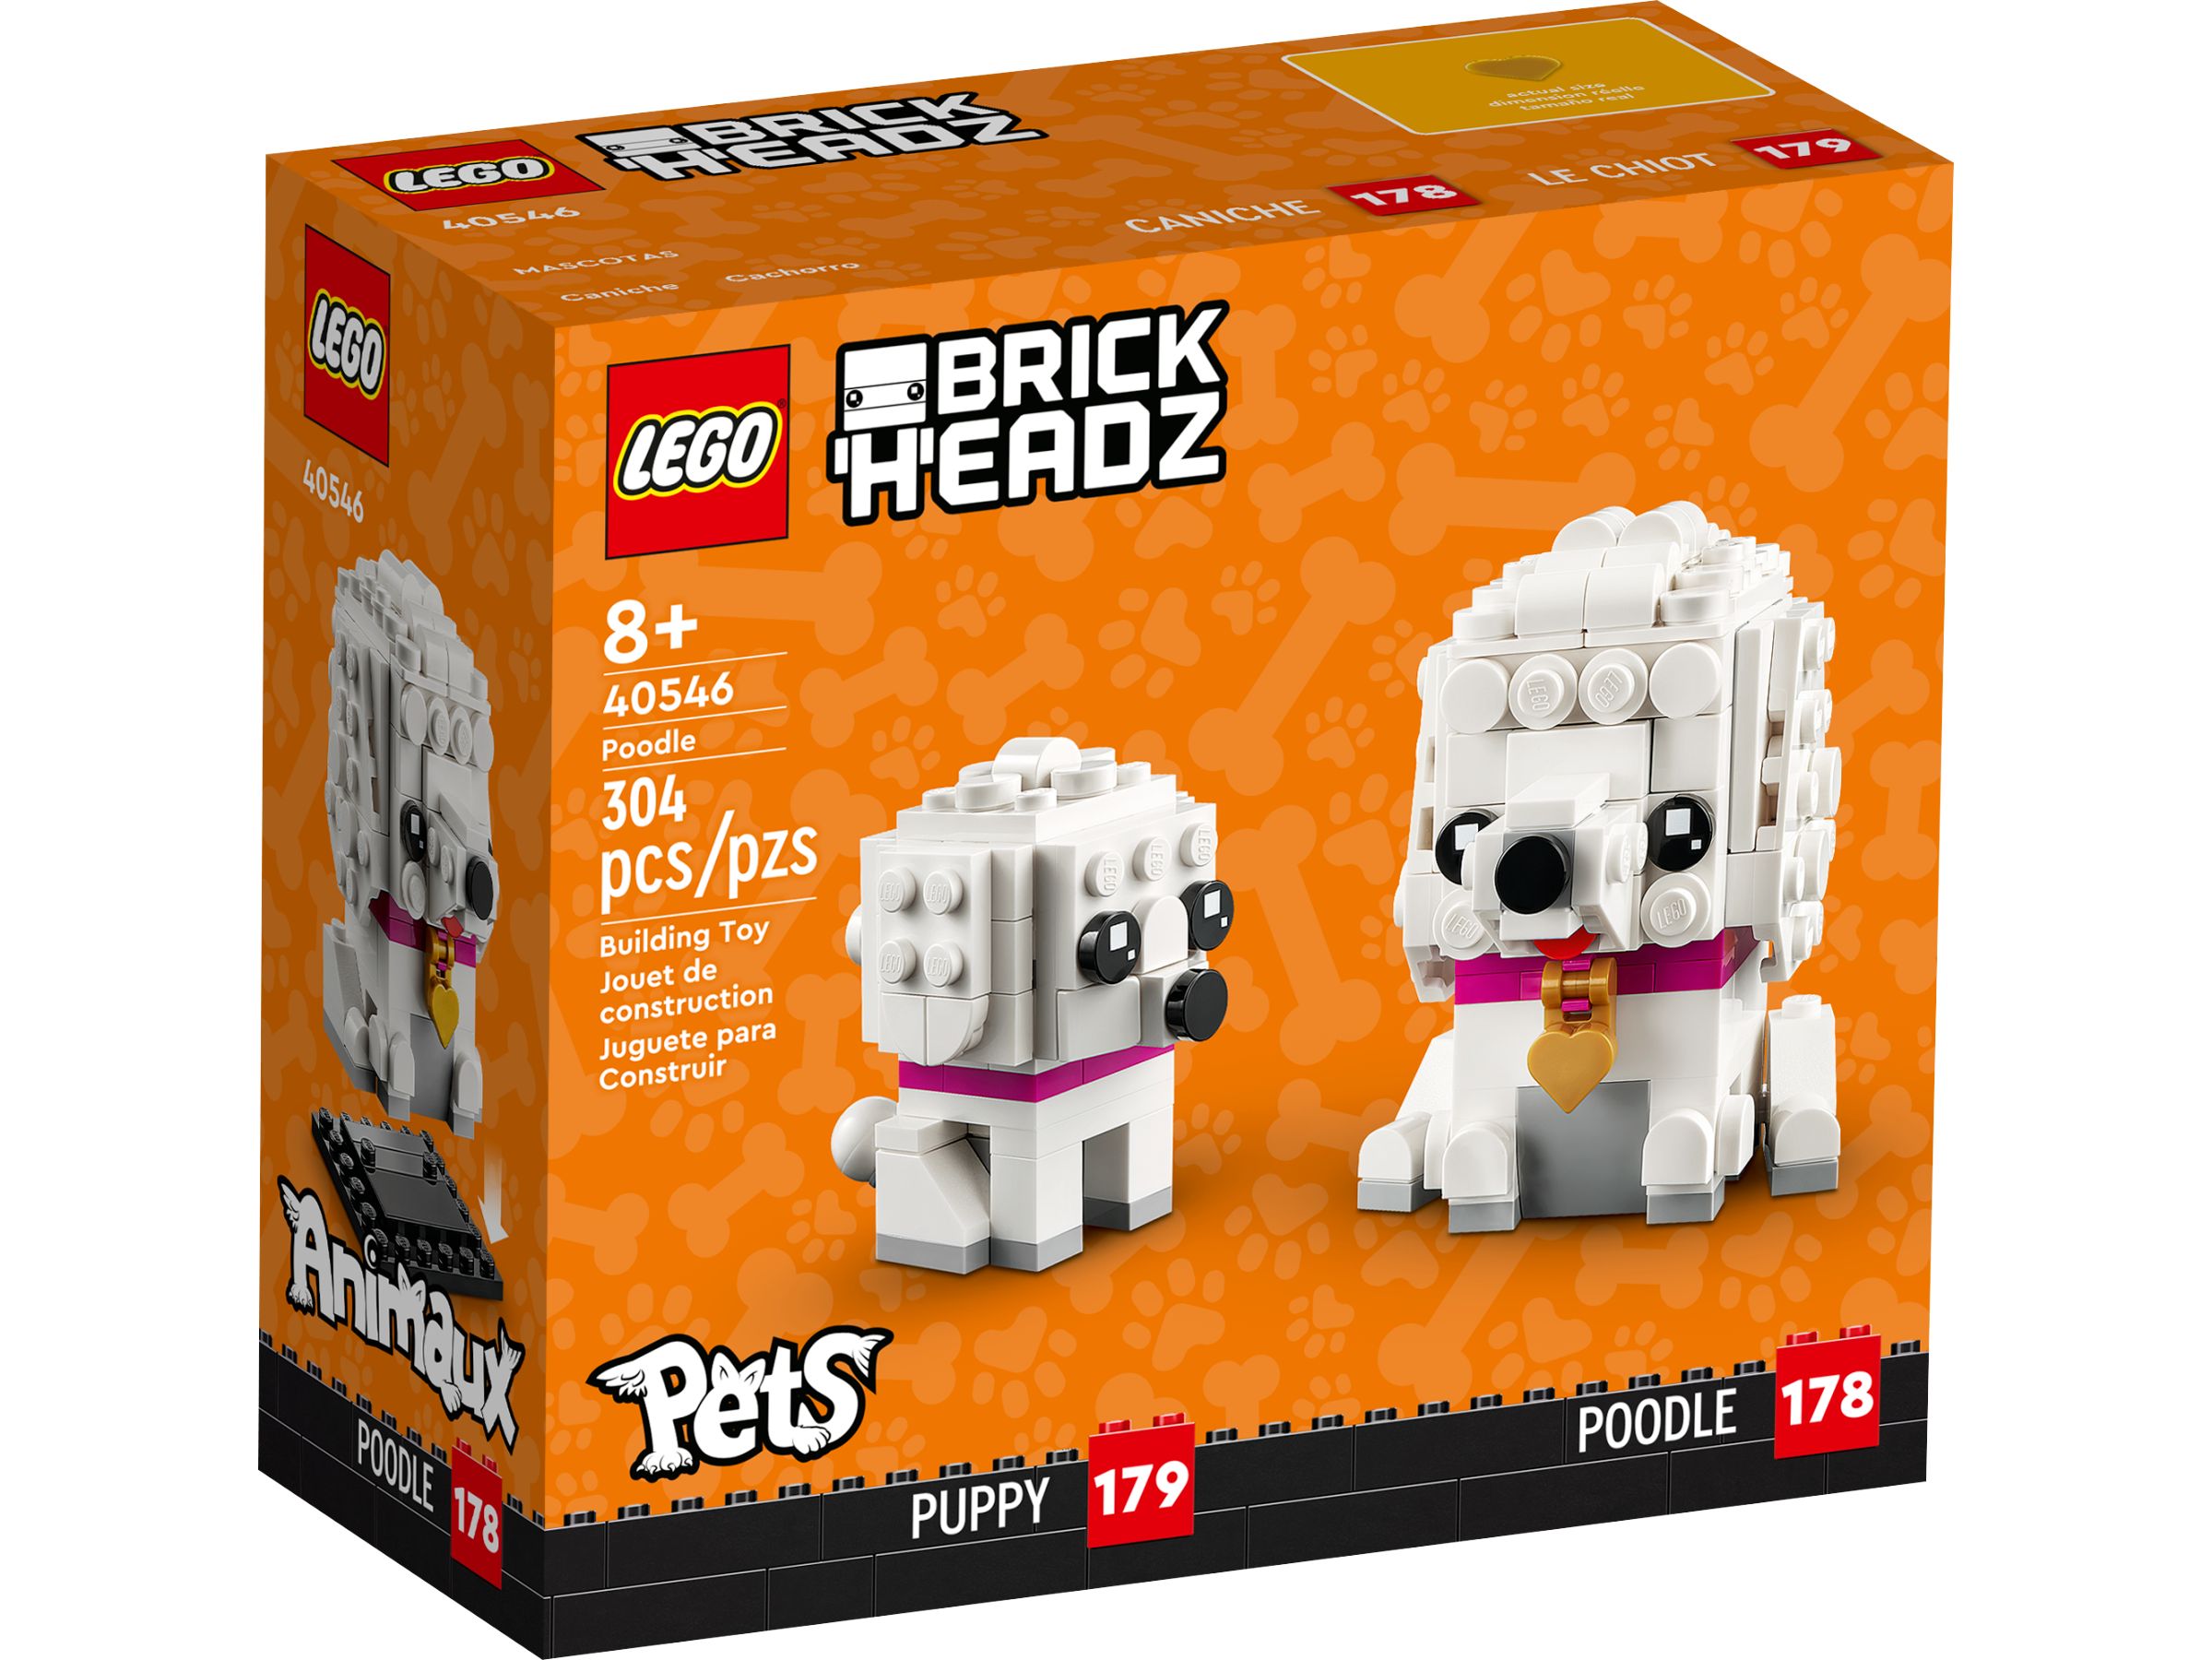 LEGO BrickHeadz 40546 Pudel LEGO_40546_alt1.jpg